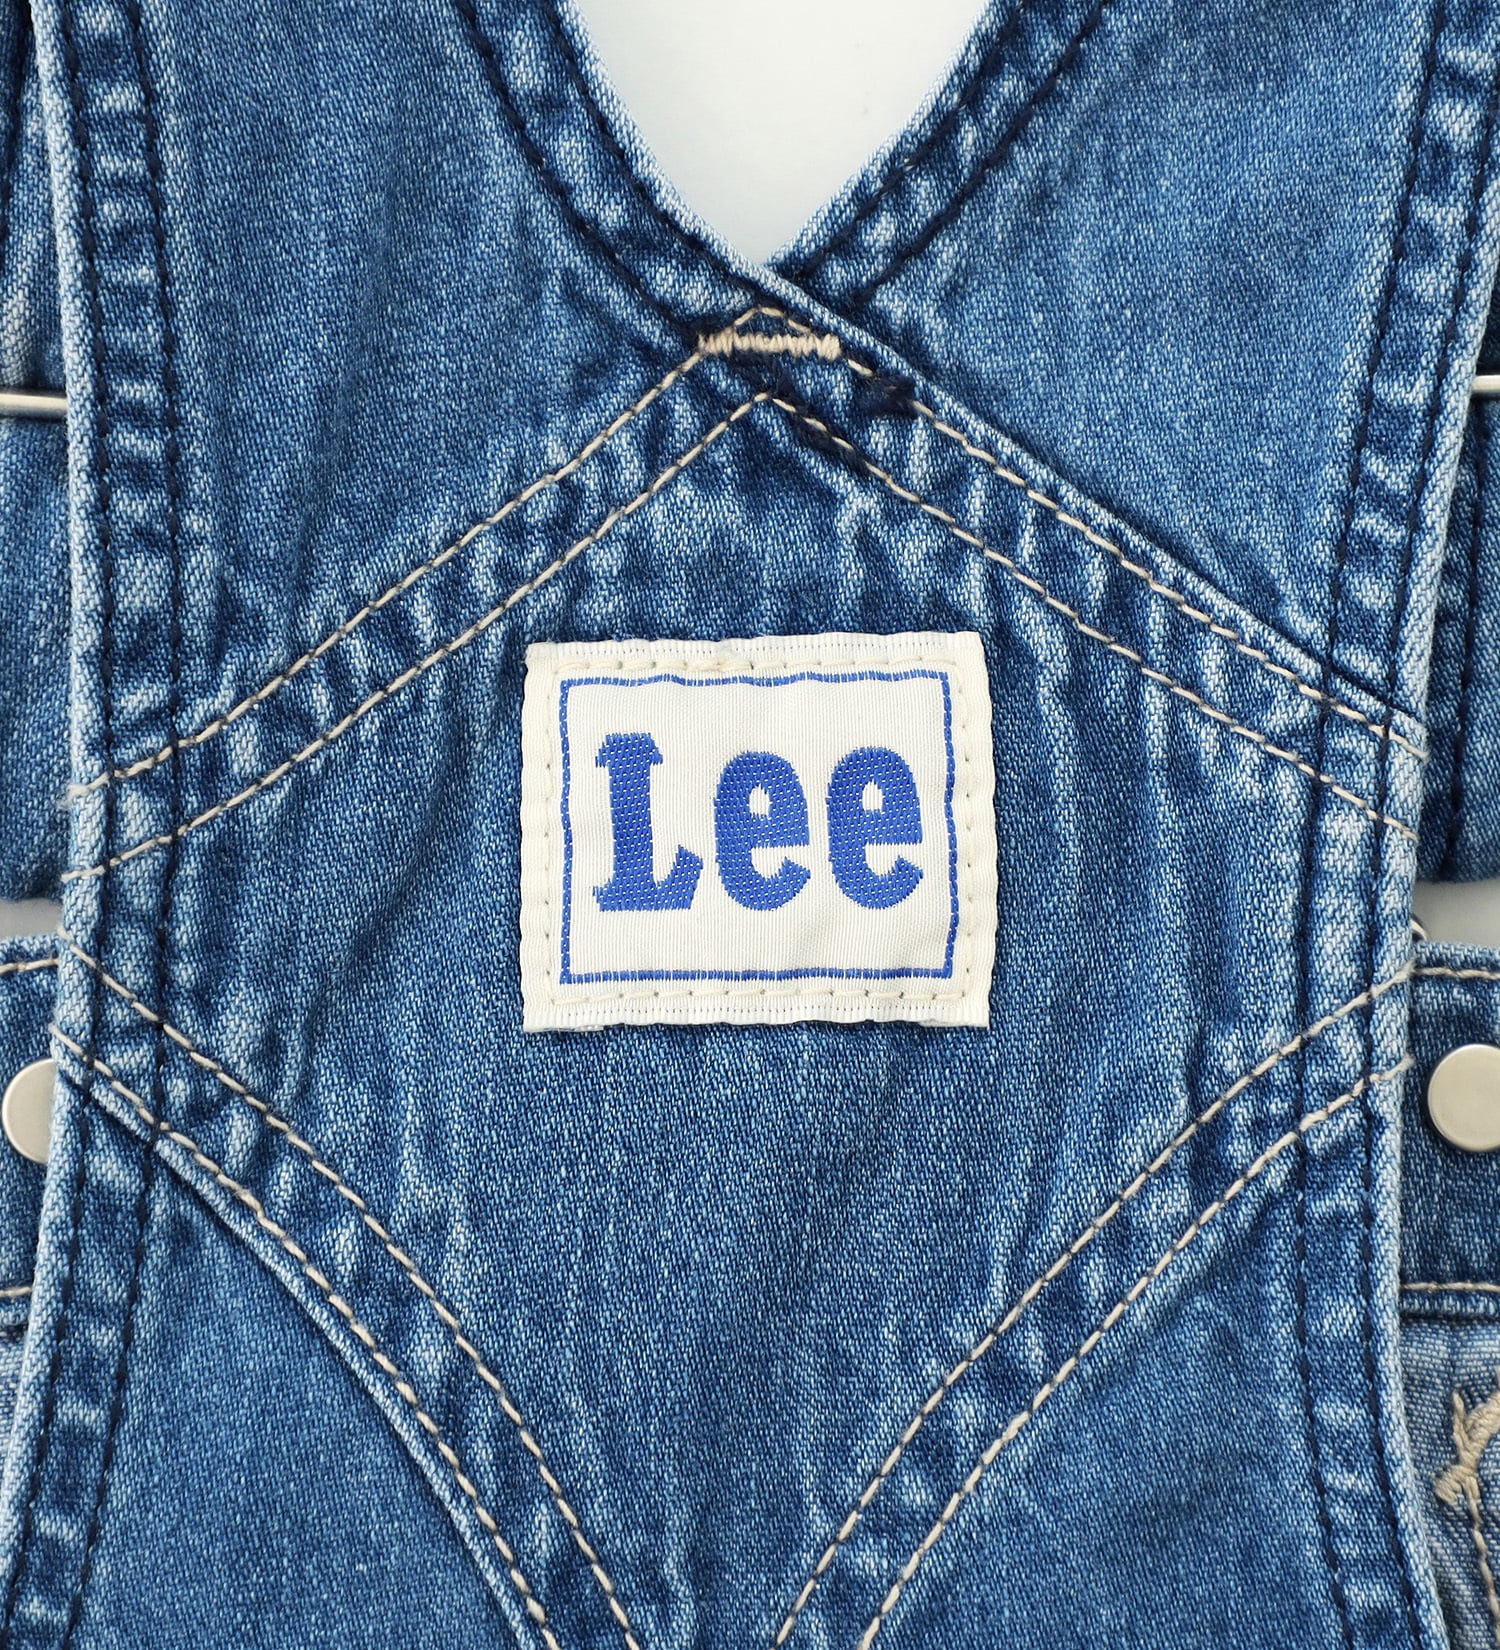 Lee(リー)の【80-100cm】ベビー ジャンパースカート|オールインワン/ジャンパースカート/キッズ|中色ブルー